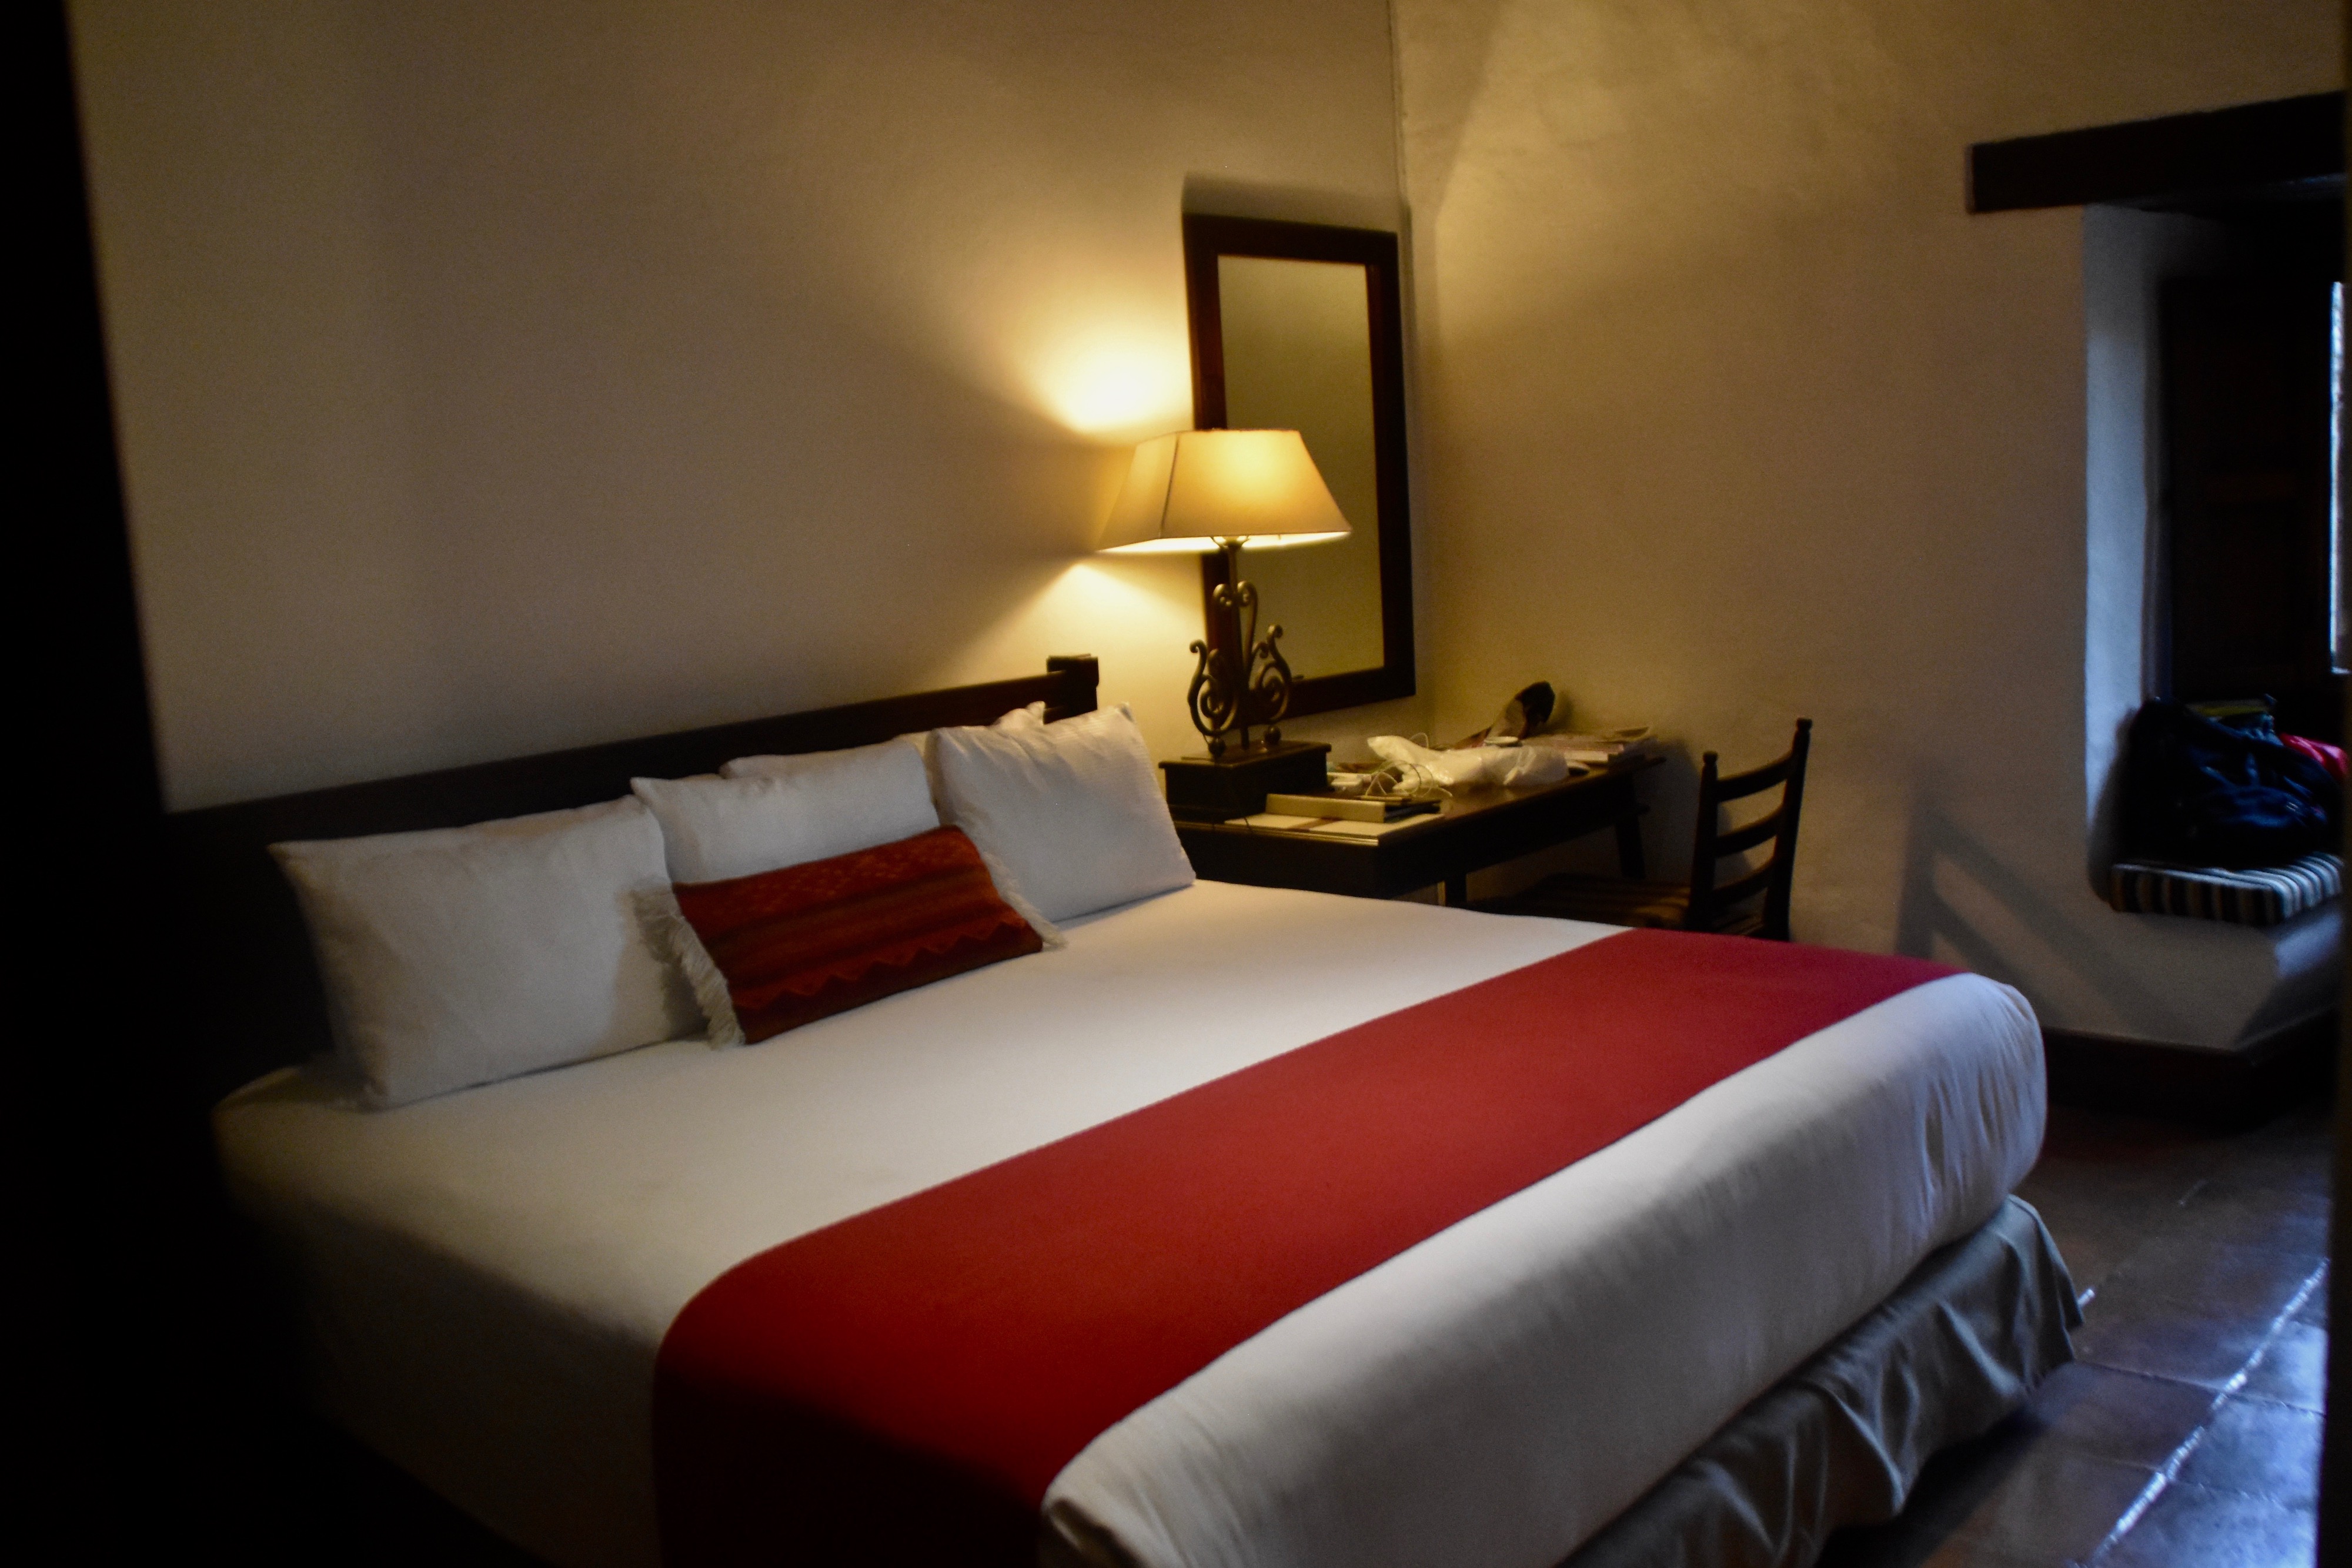 Room 215, Quinta Real